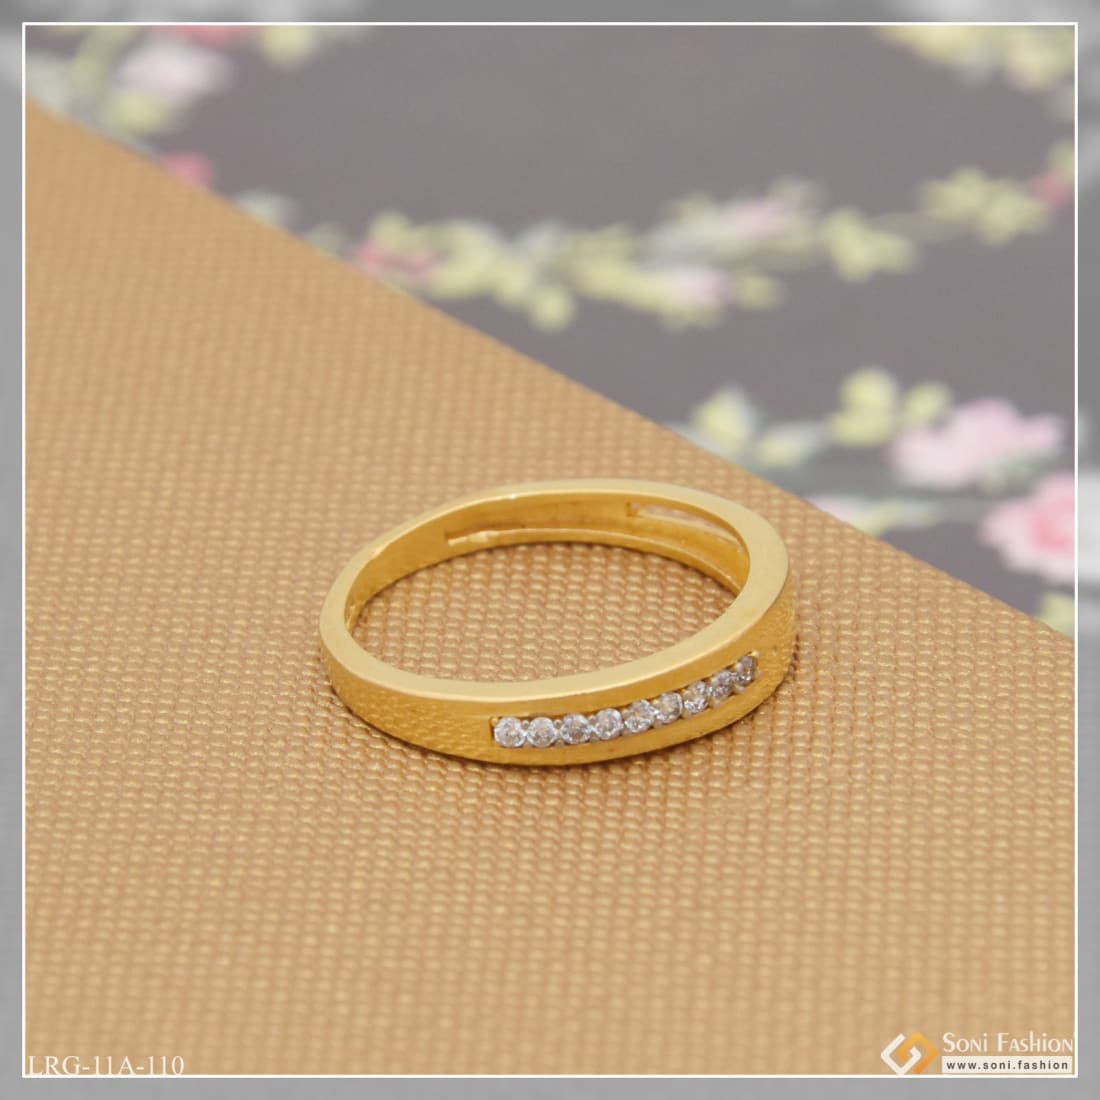 Shop Affordable Custom Diamond Engagement Rings for Women